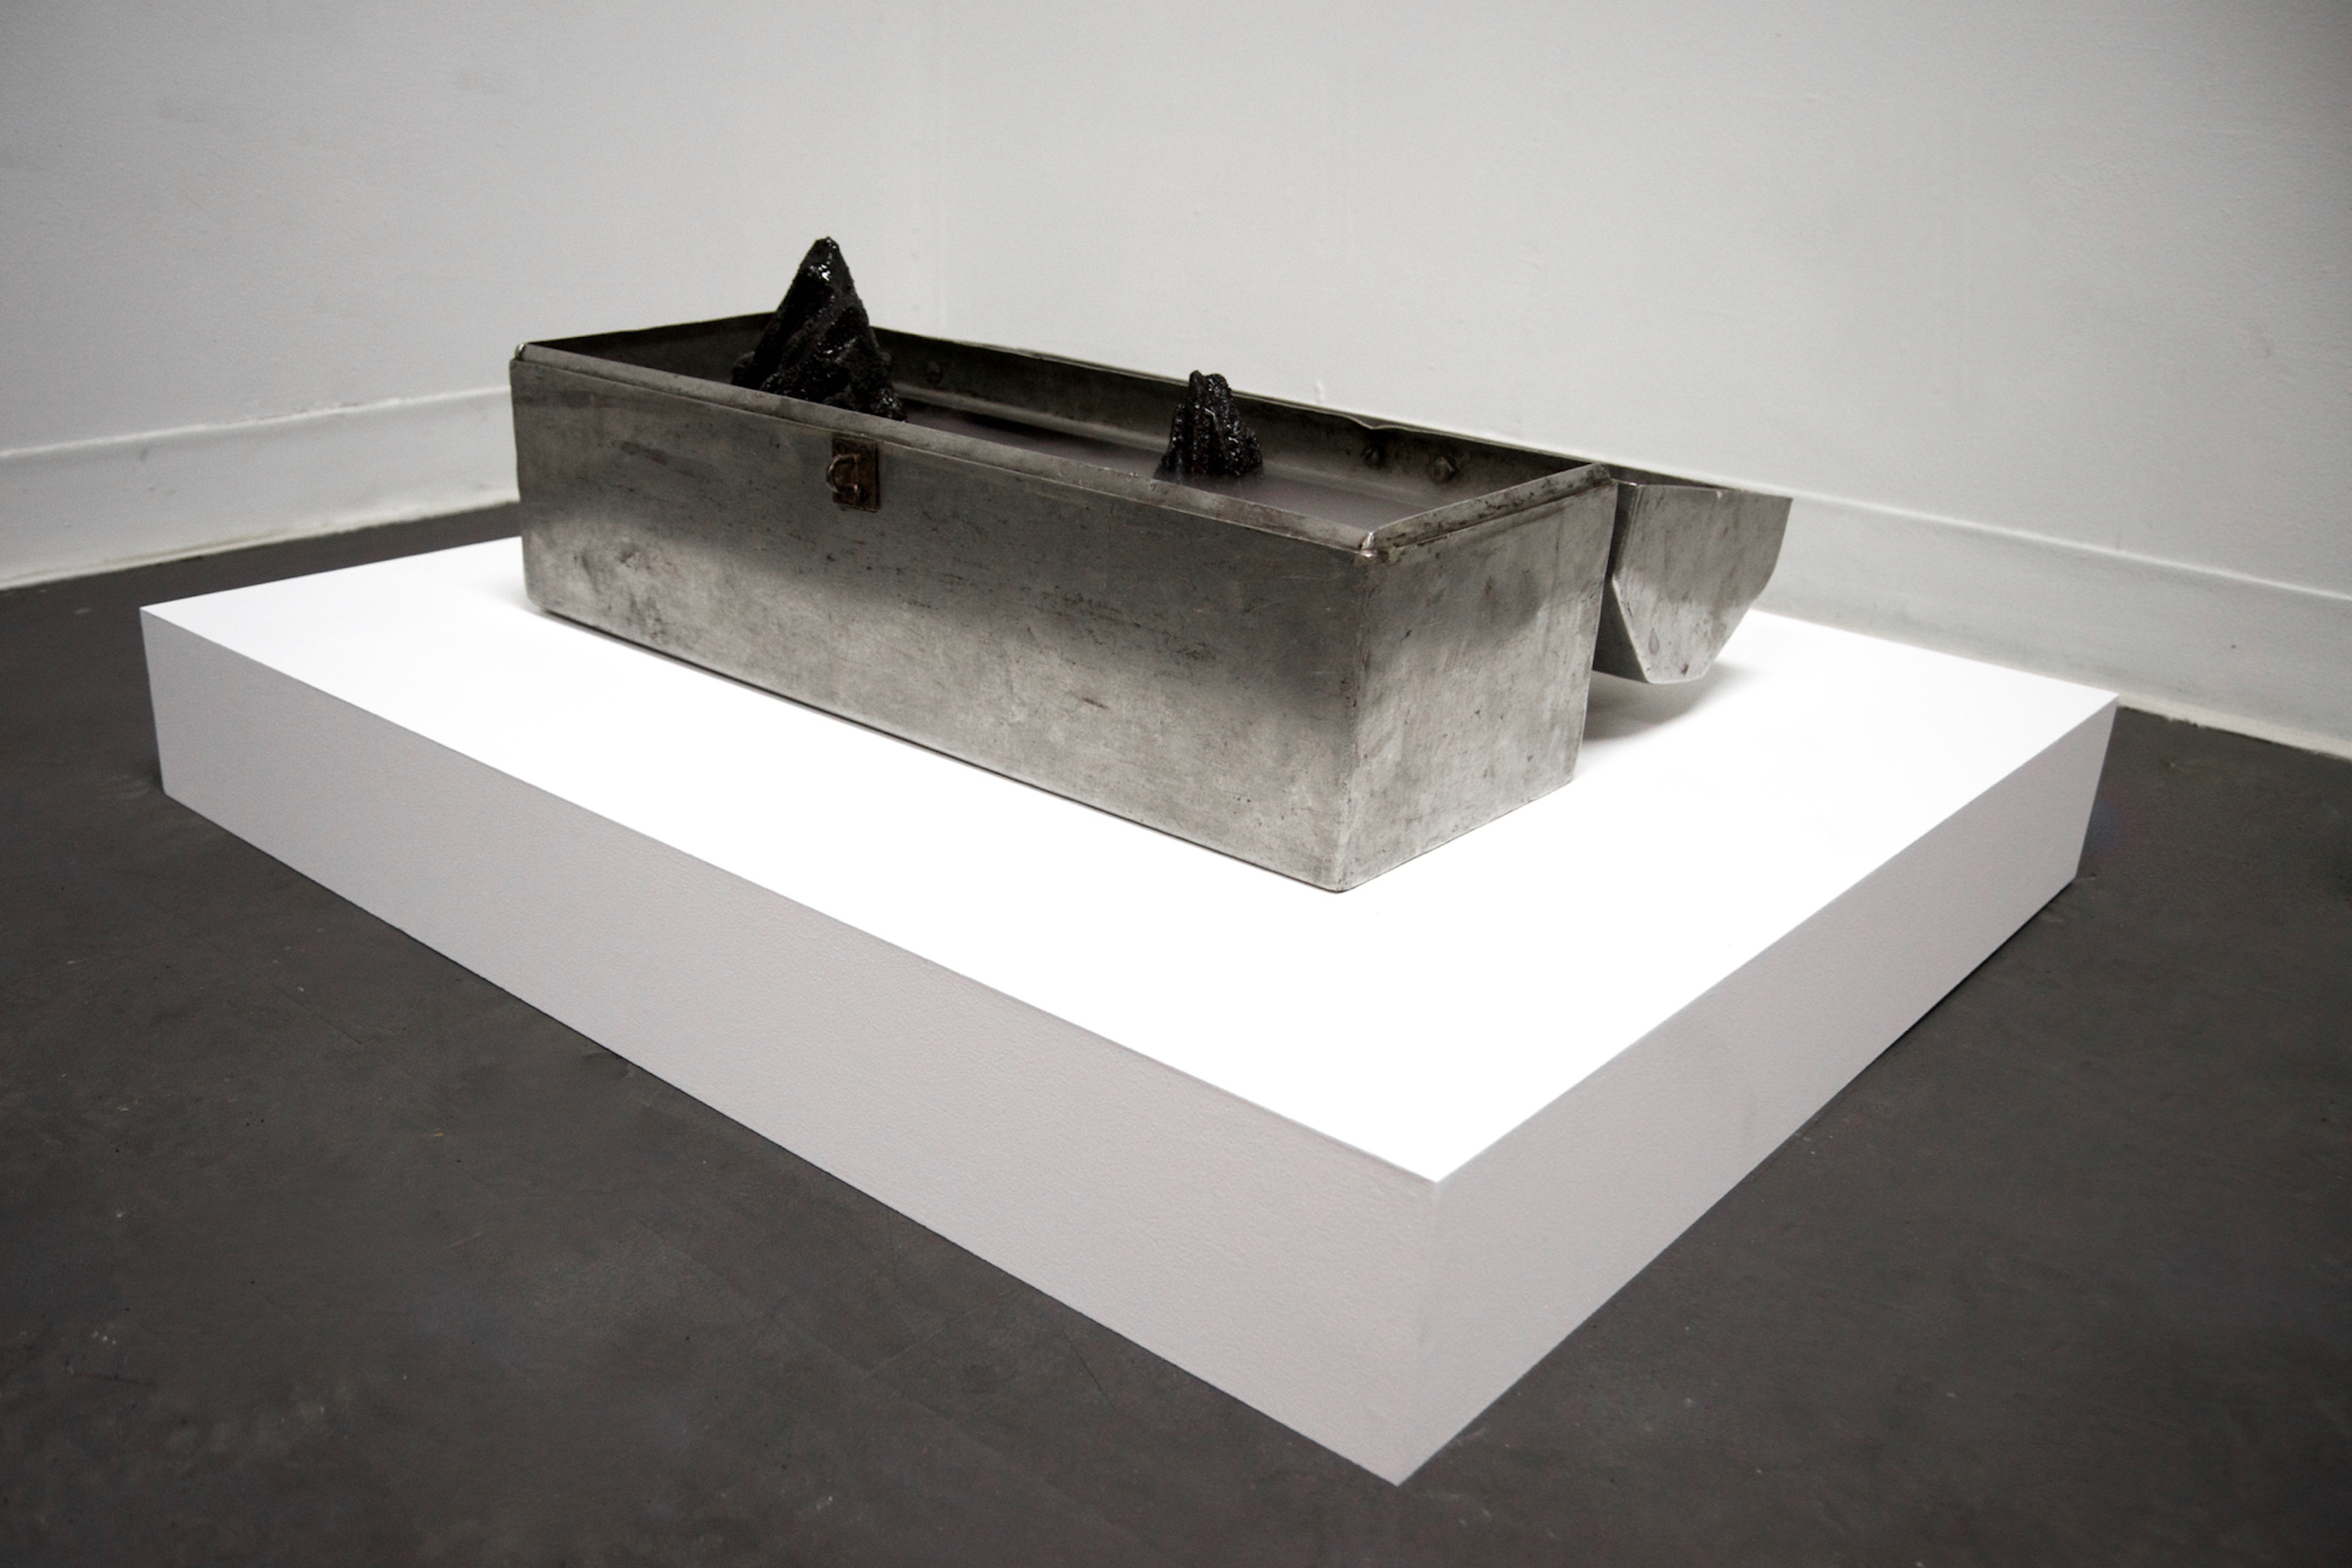 Caroline Hatfield, Depths and Distances, 2019, 5.5" x 20.5" x 15", found object (tool box), resin bonded coal slag, water, mist maker